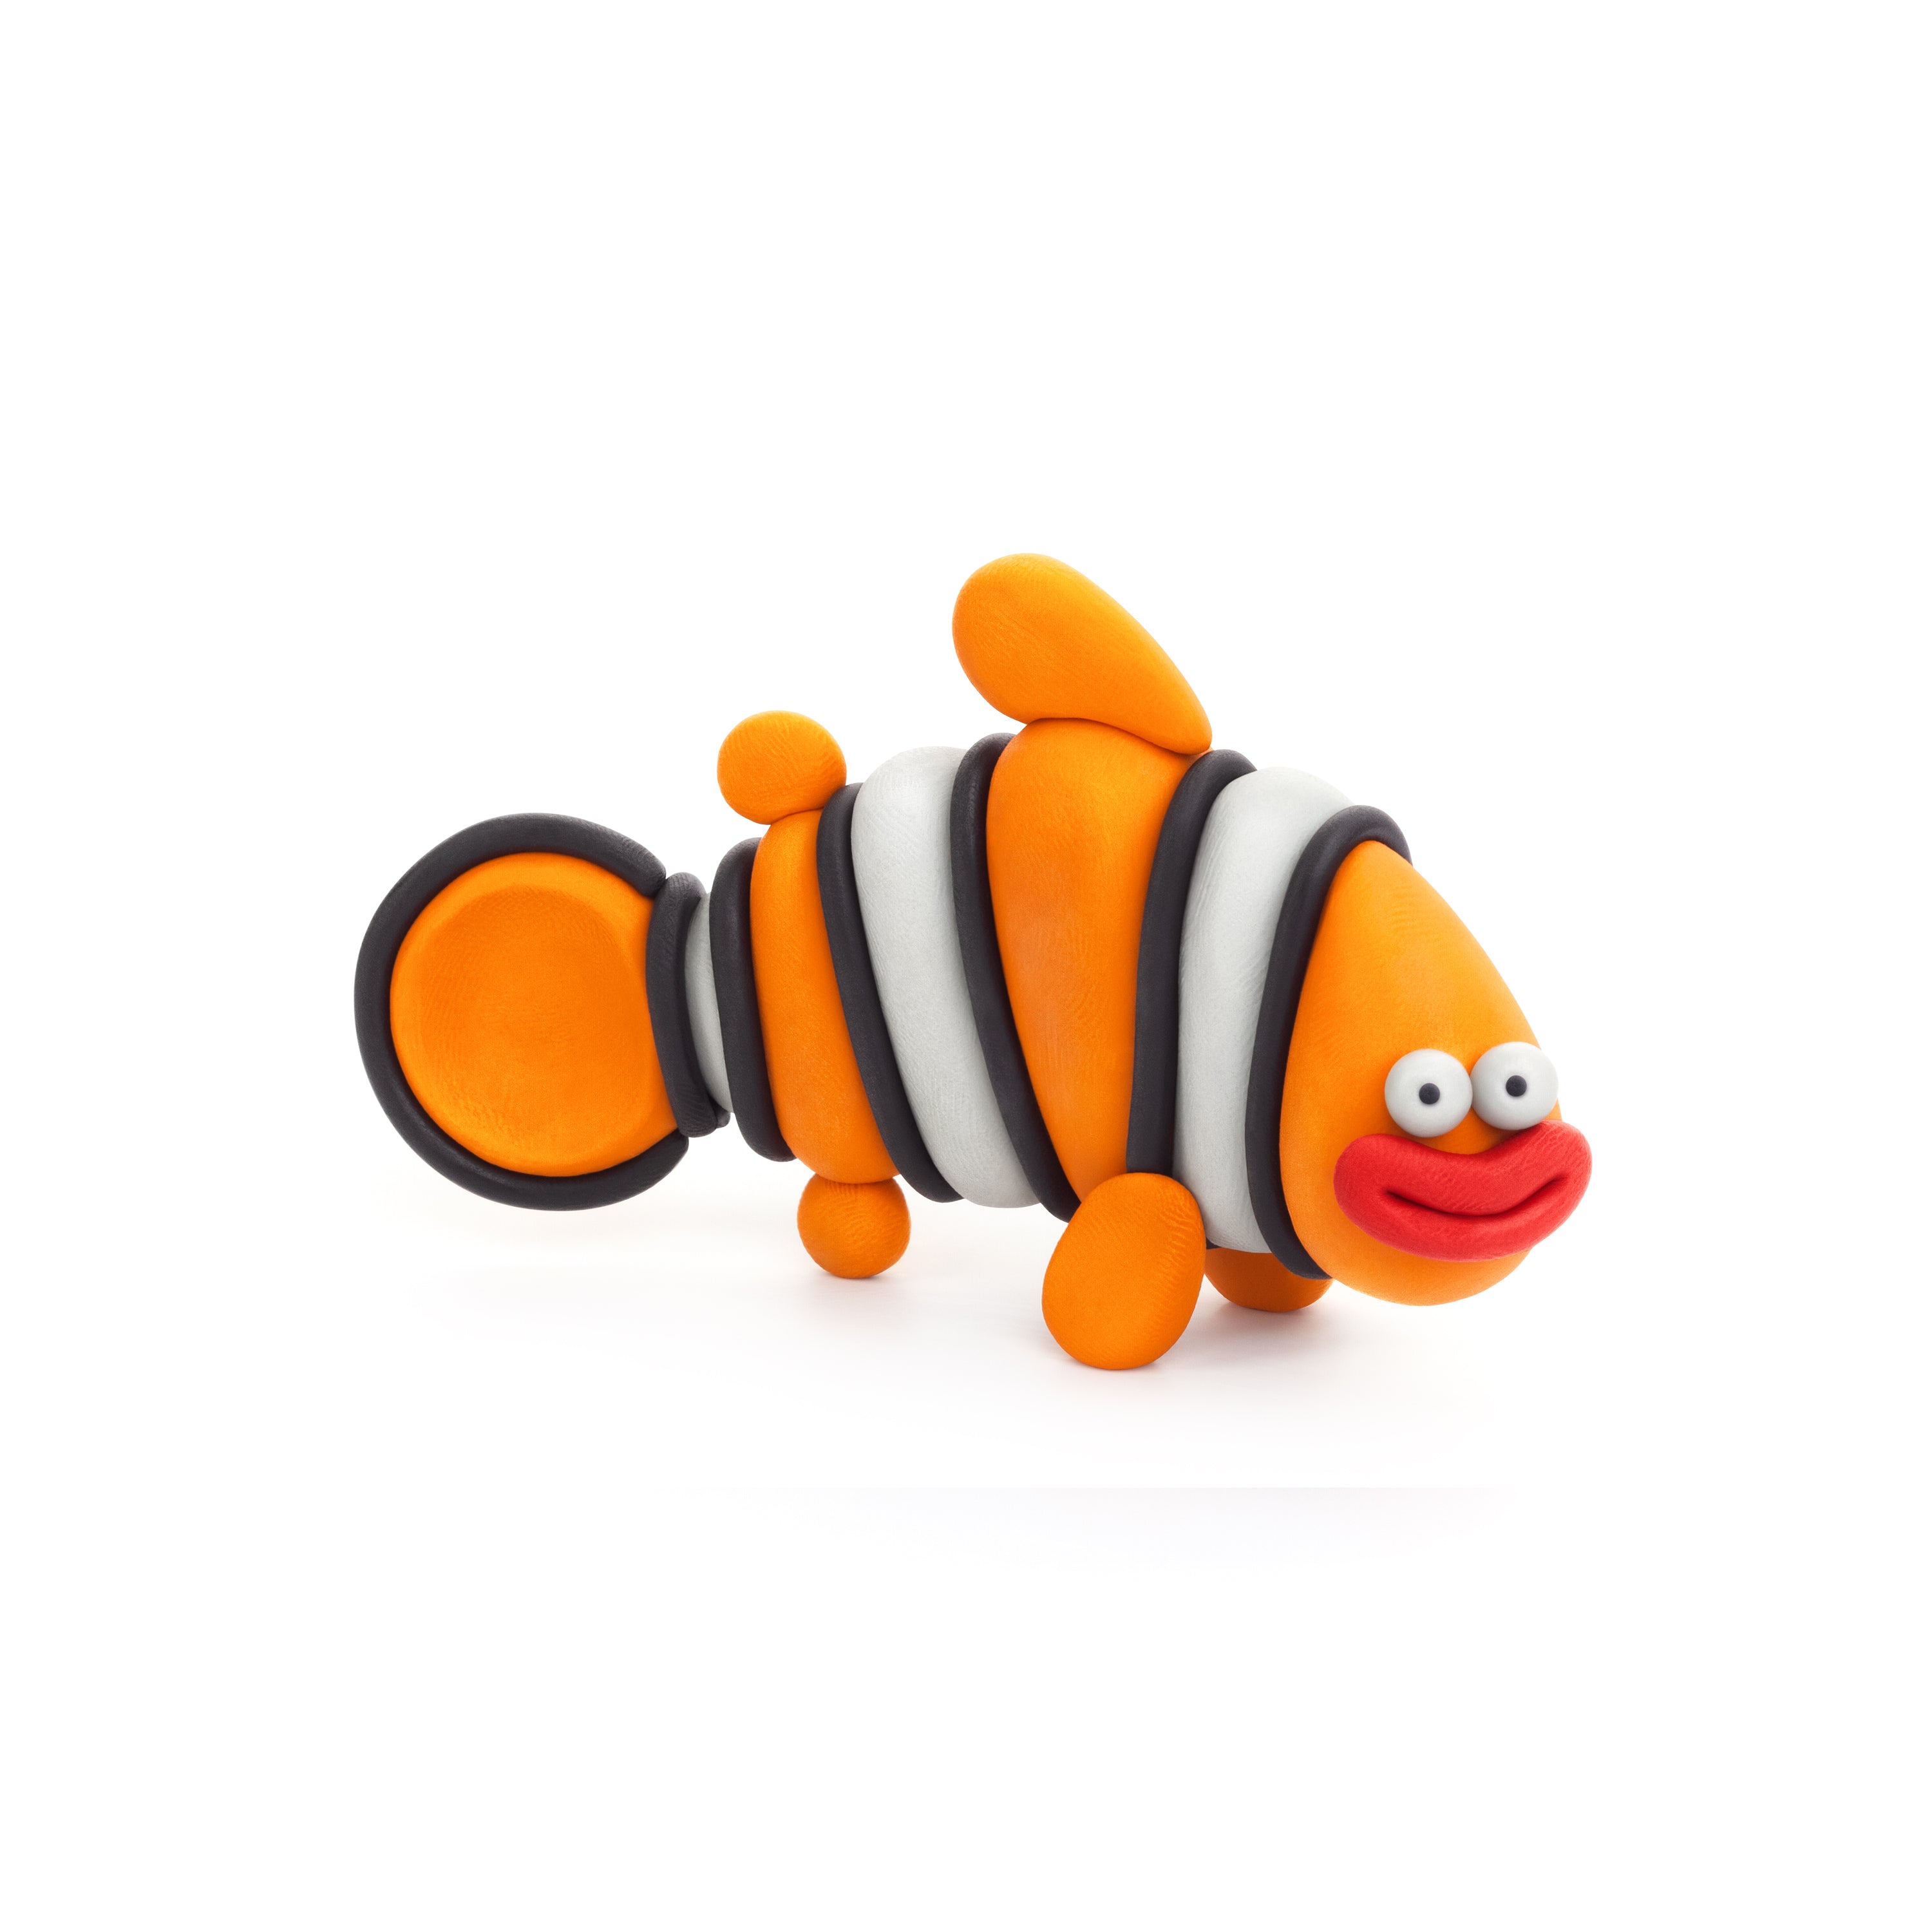 Hey Clay | Ocean - Clownfish, Discus Fish & Eel